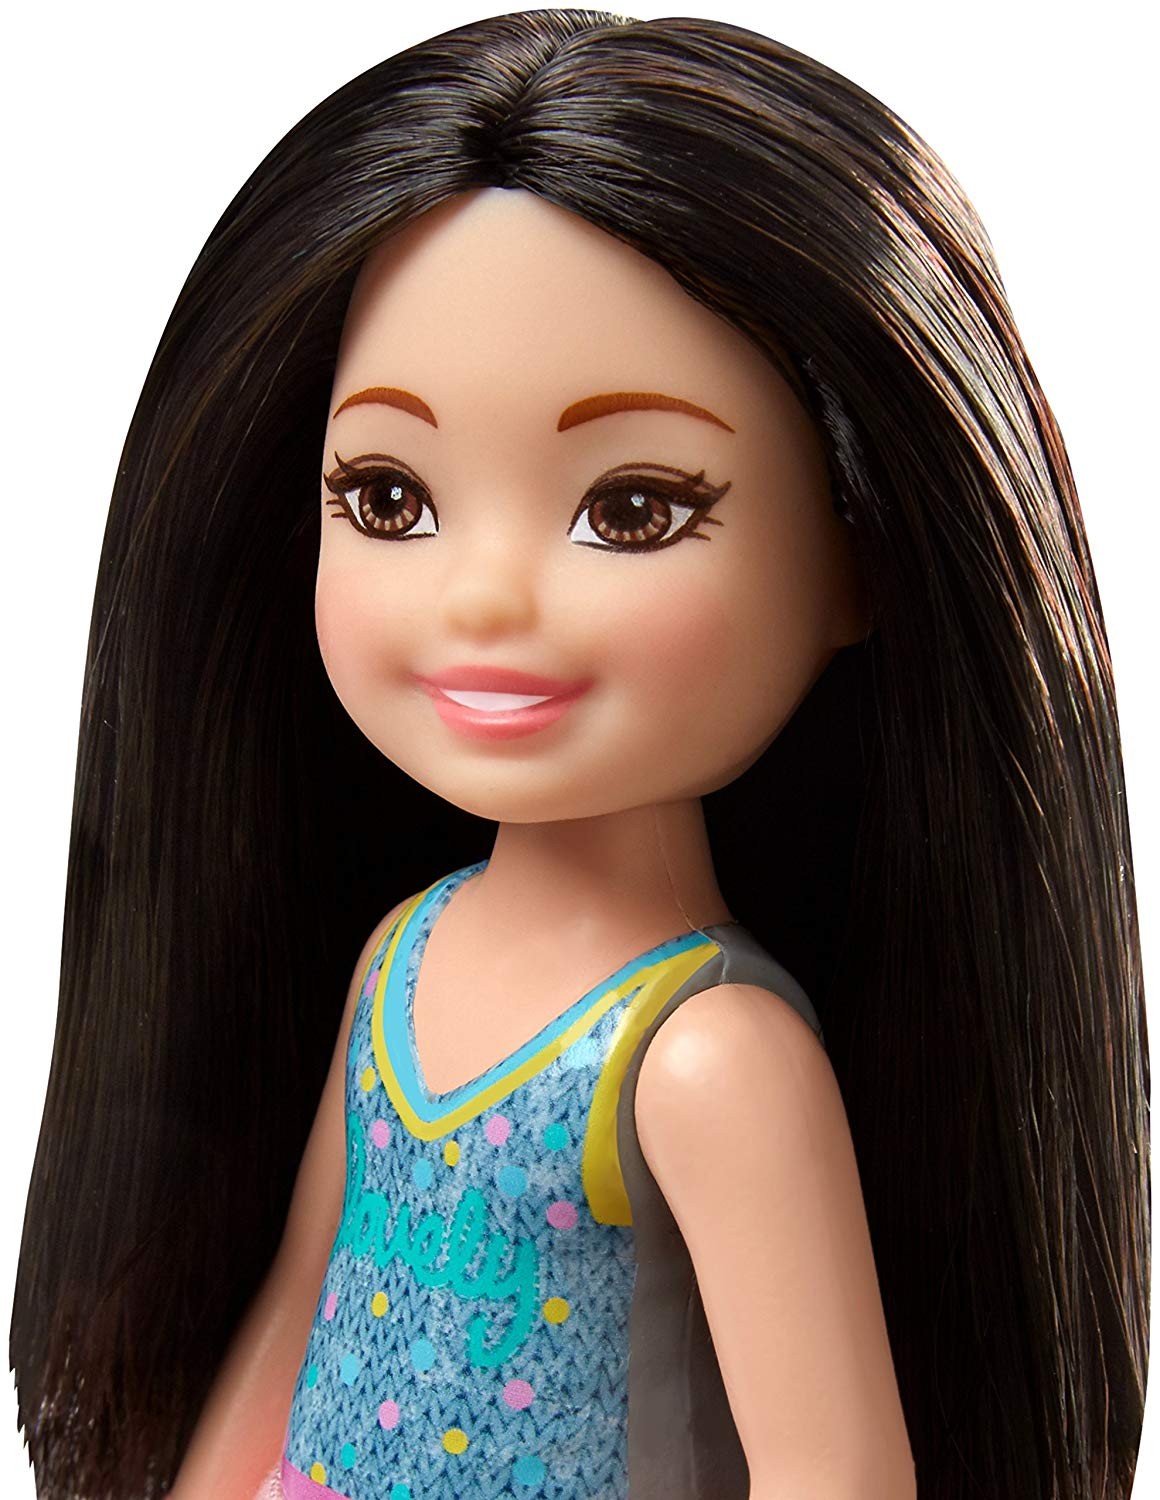 Black haired barbie